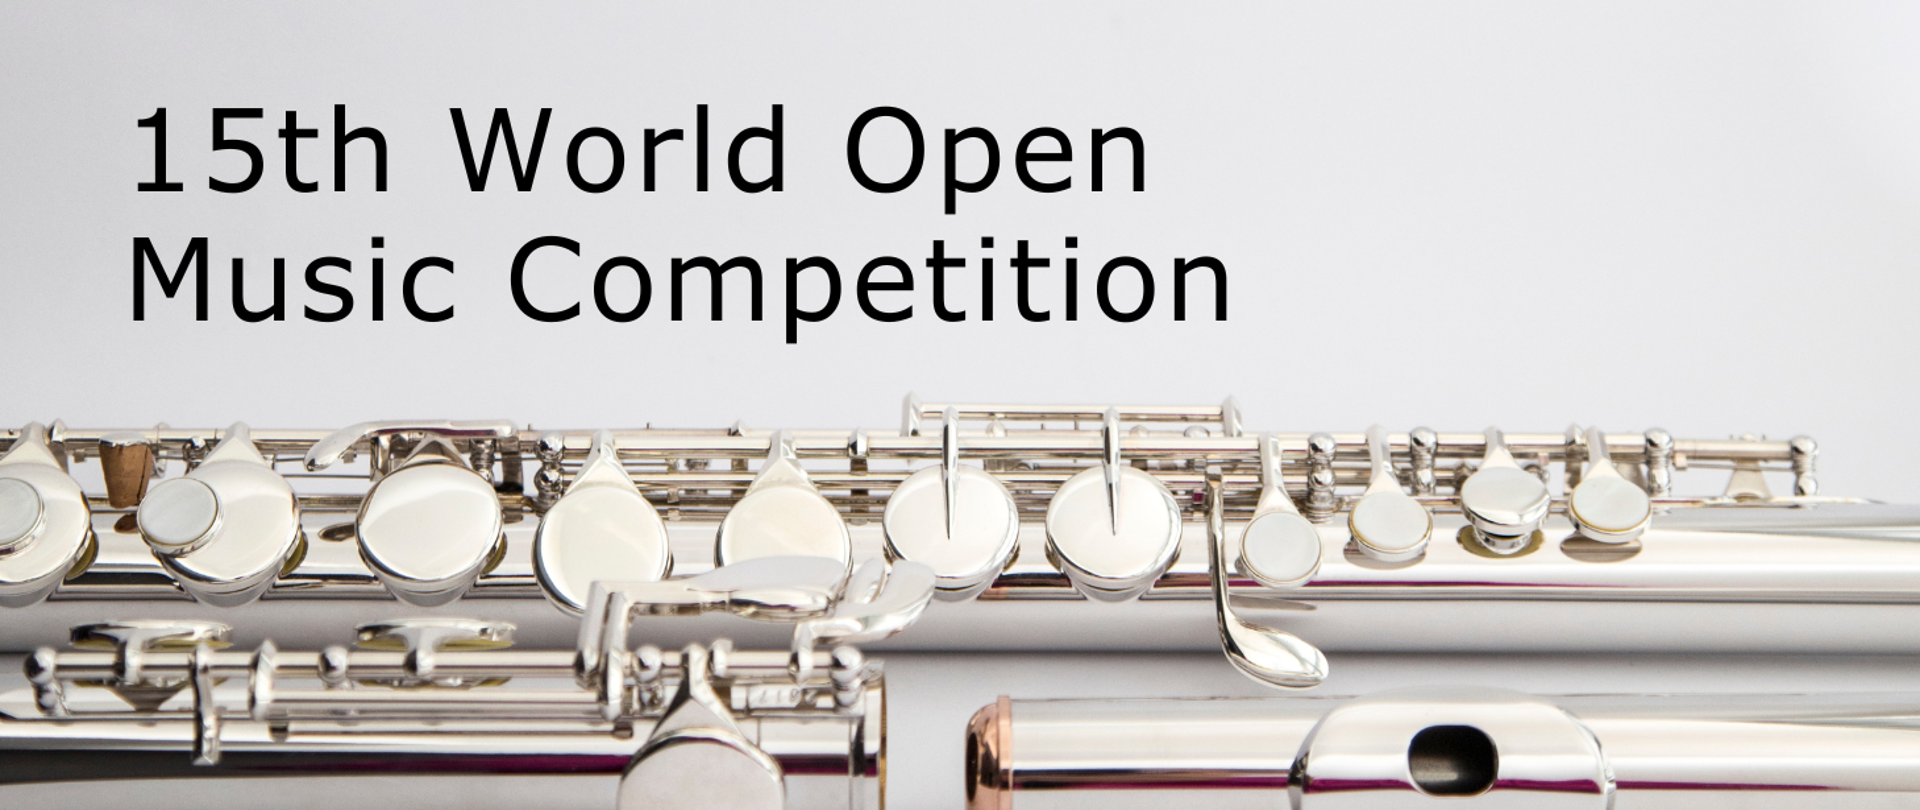 Srebrny flet na białym tle a nad nim czarny napis 15th World Open Music Competition